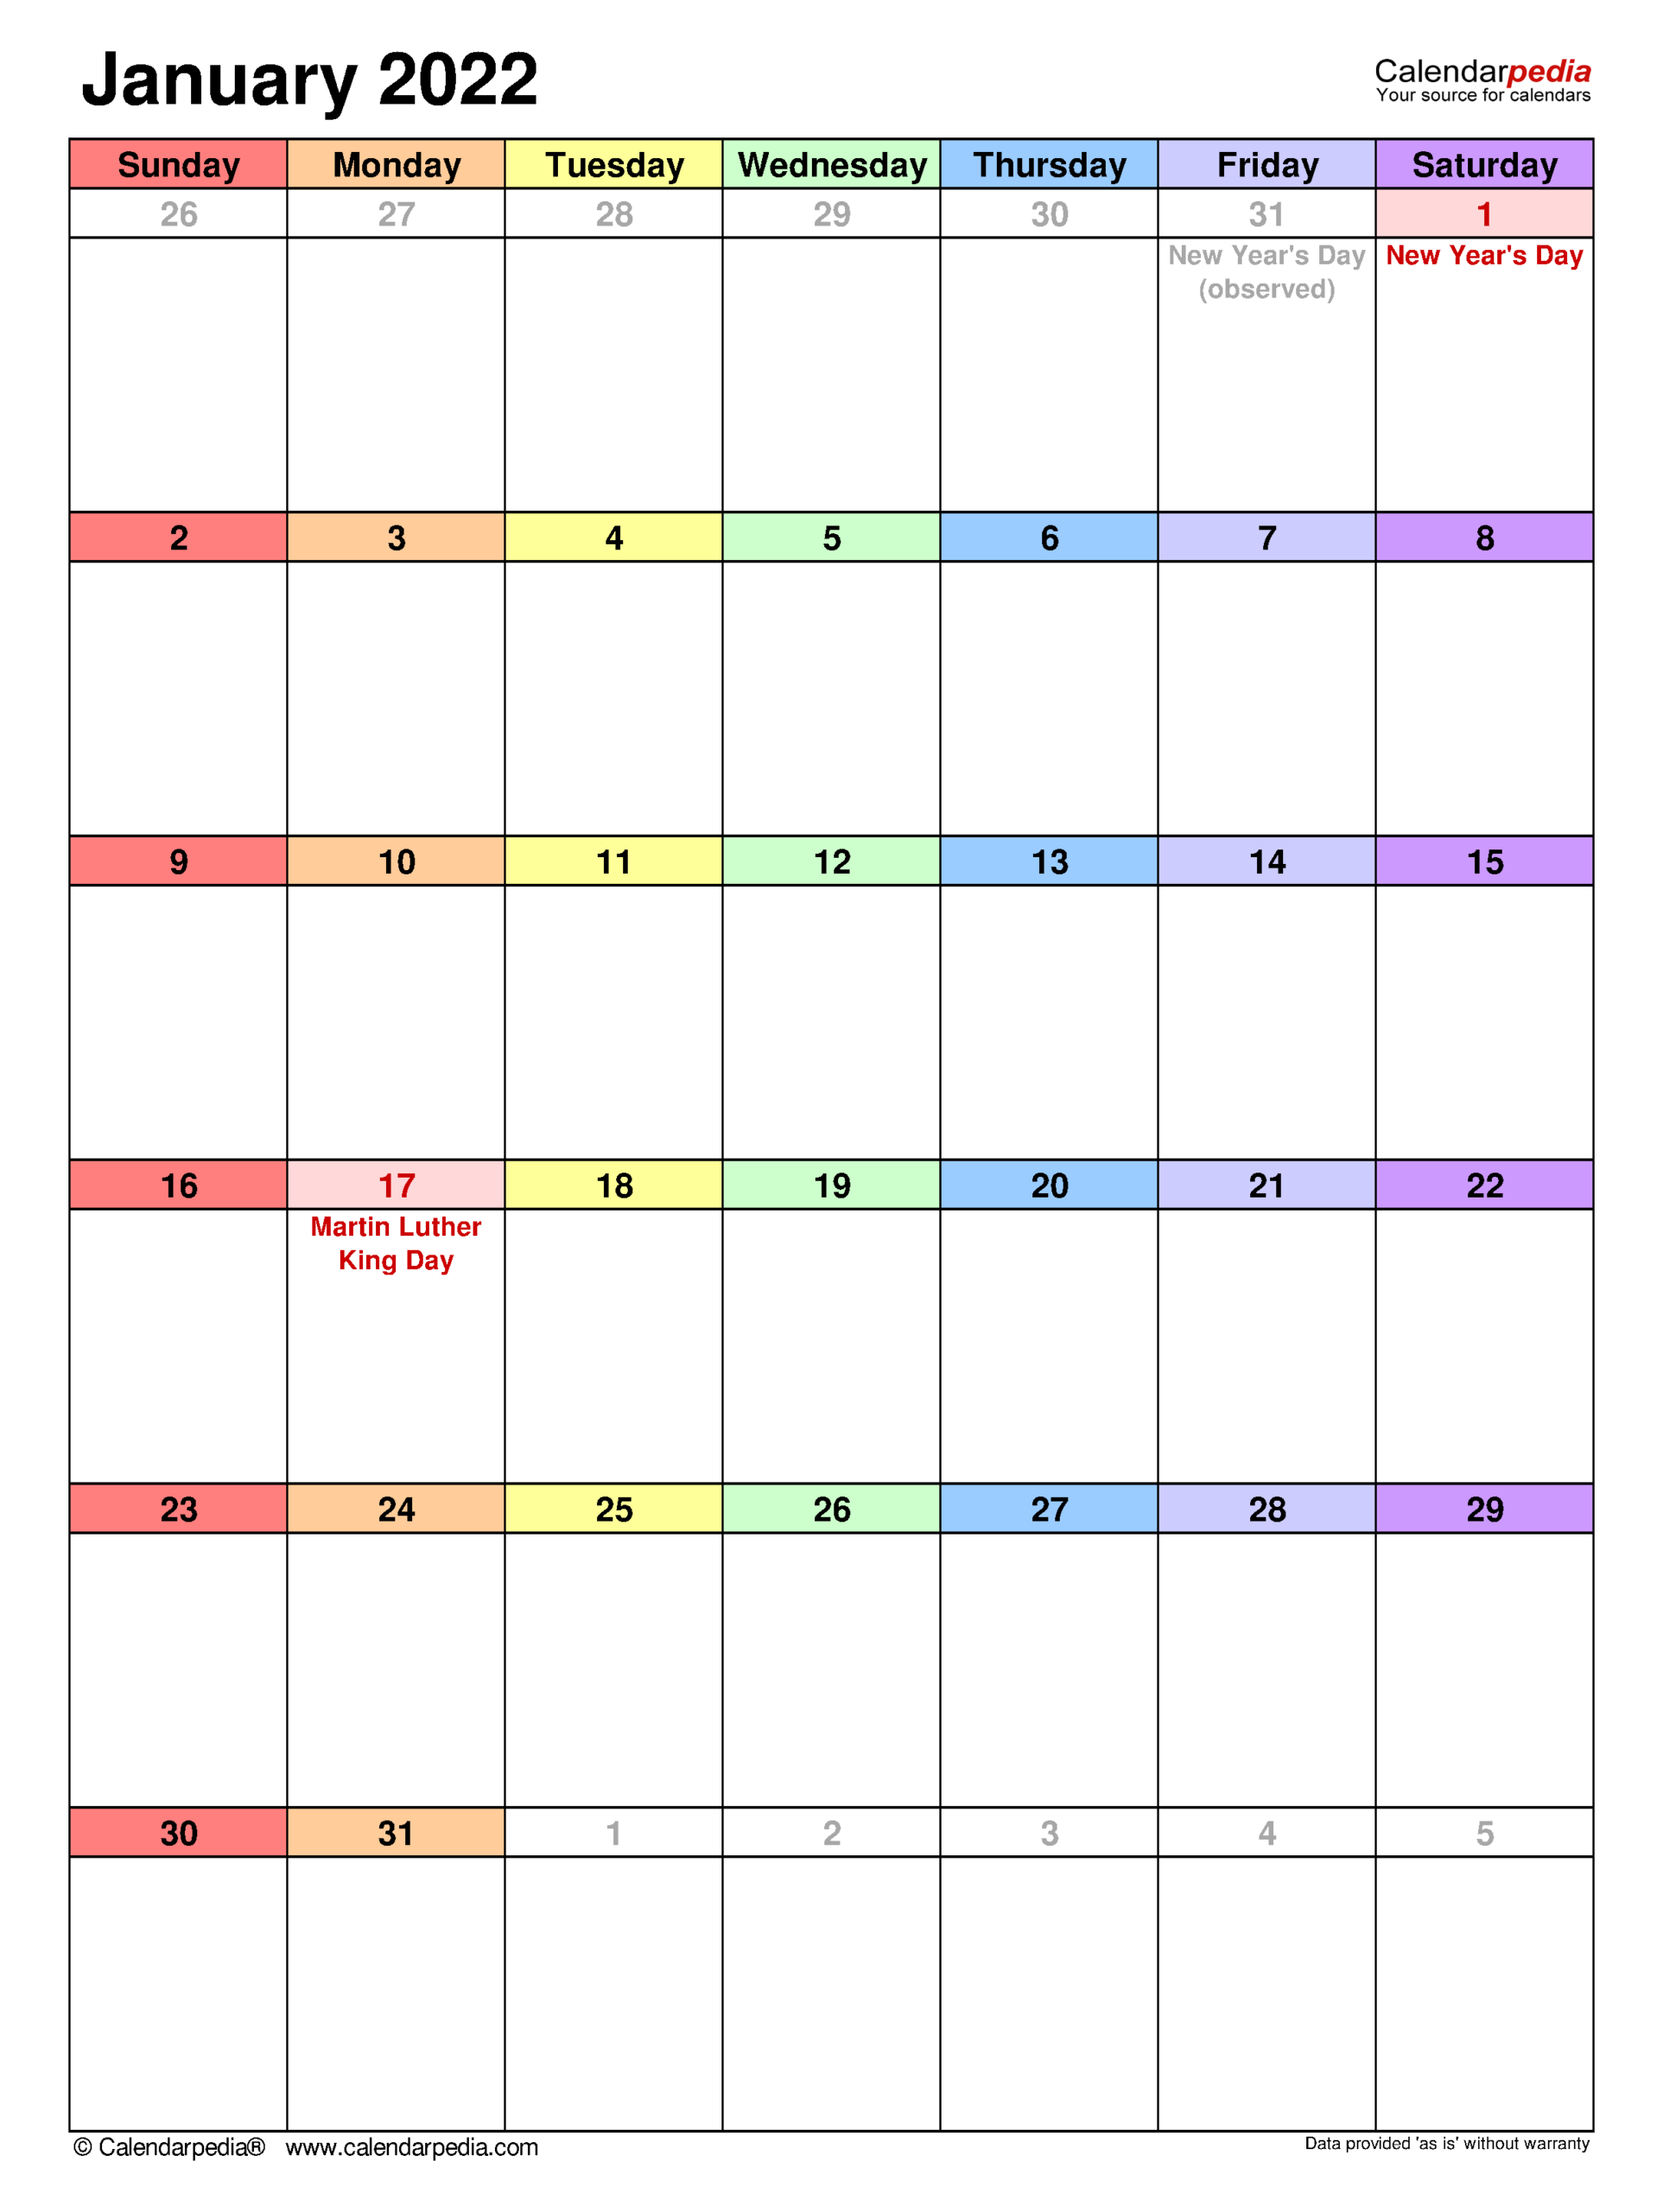 Take January 2022 January Calendar